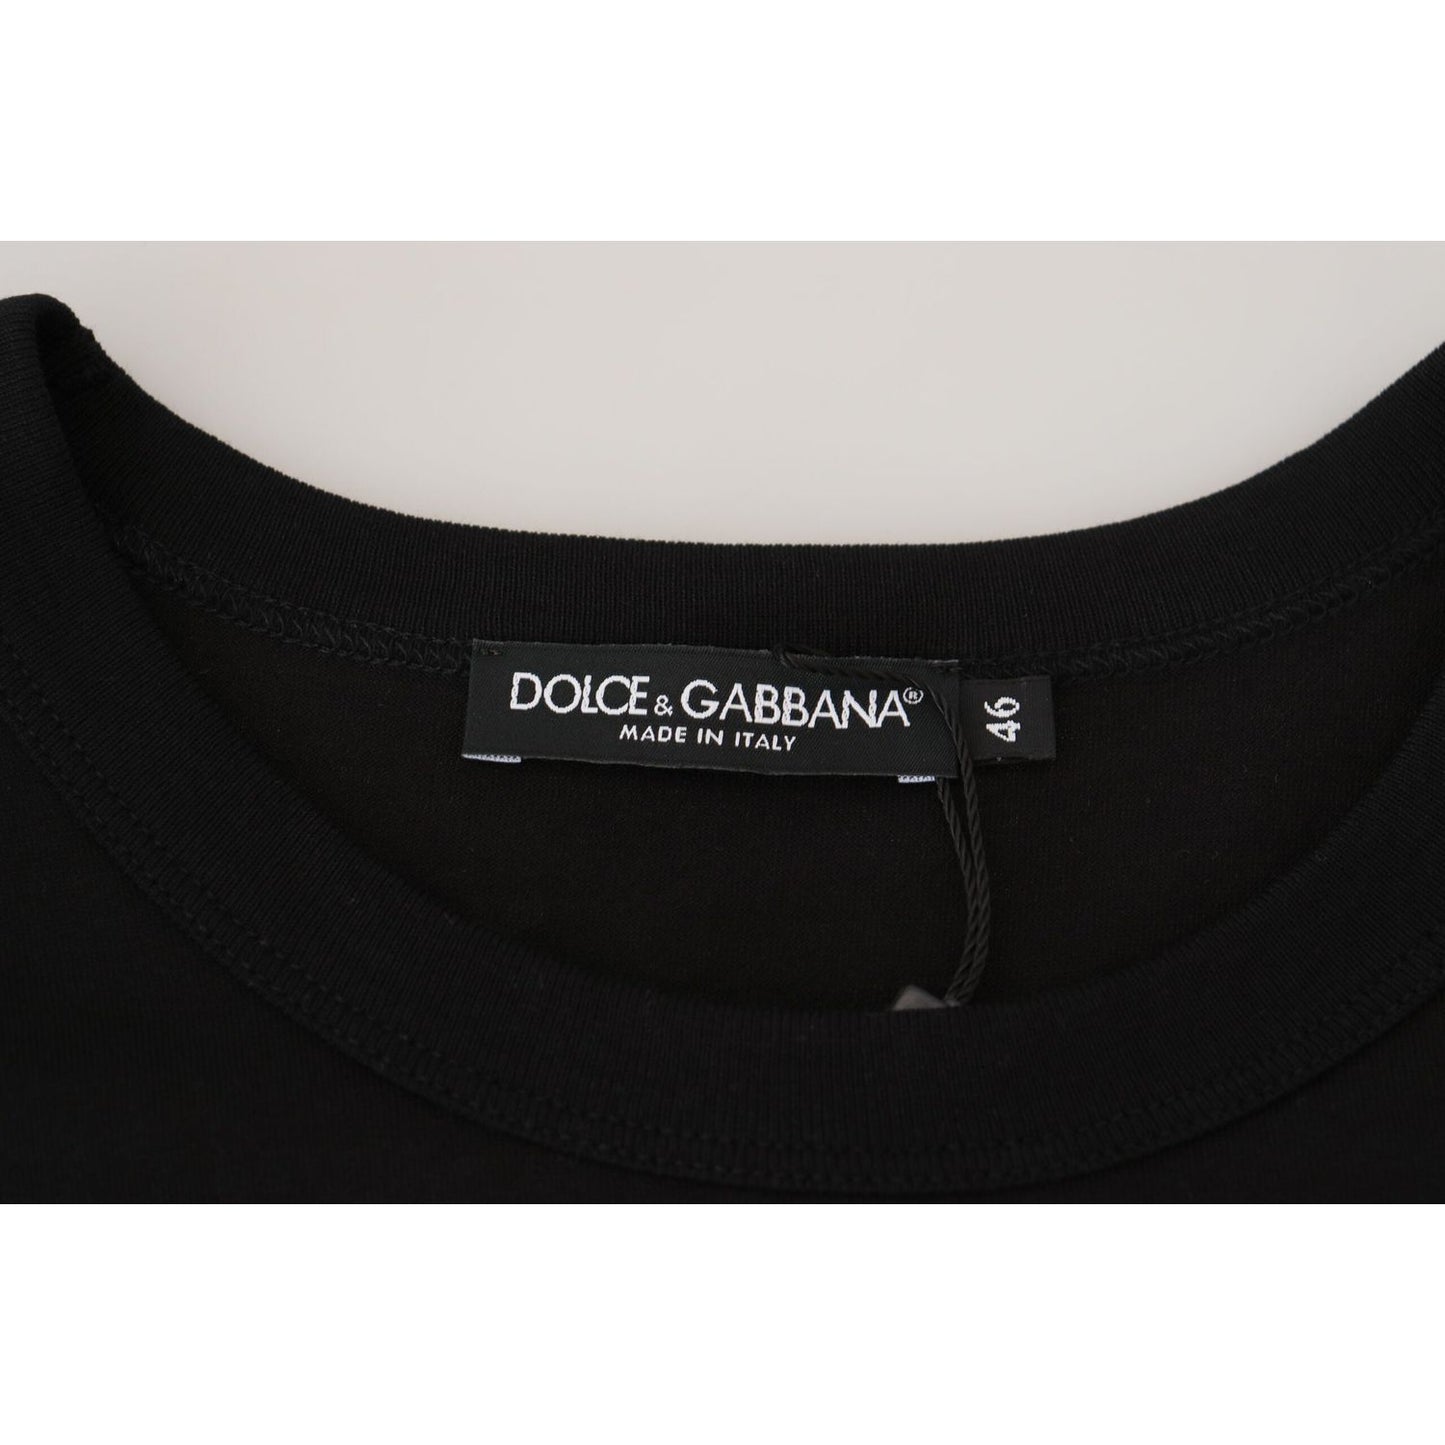 Dolce & Gabbana Chic Black Cotton Tee for the Modern Man black-sneak-peek-cotton-short-sleeve-t-shirt